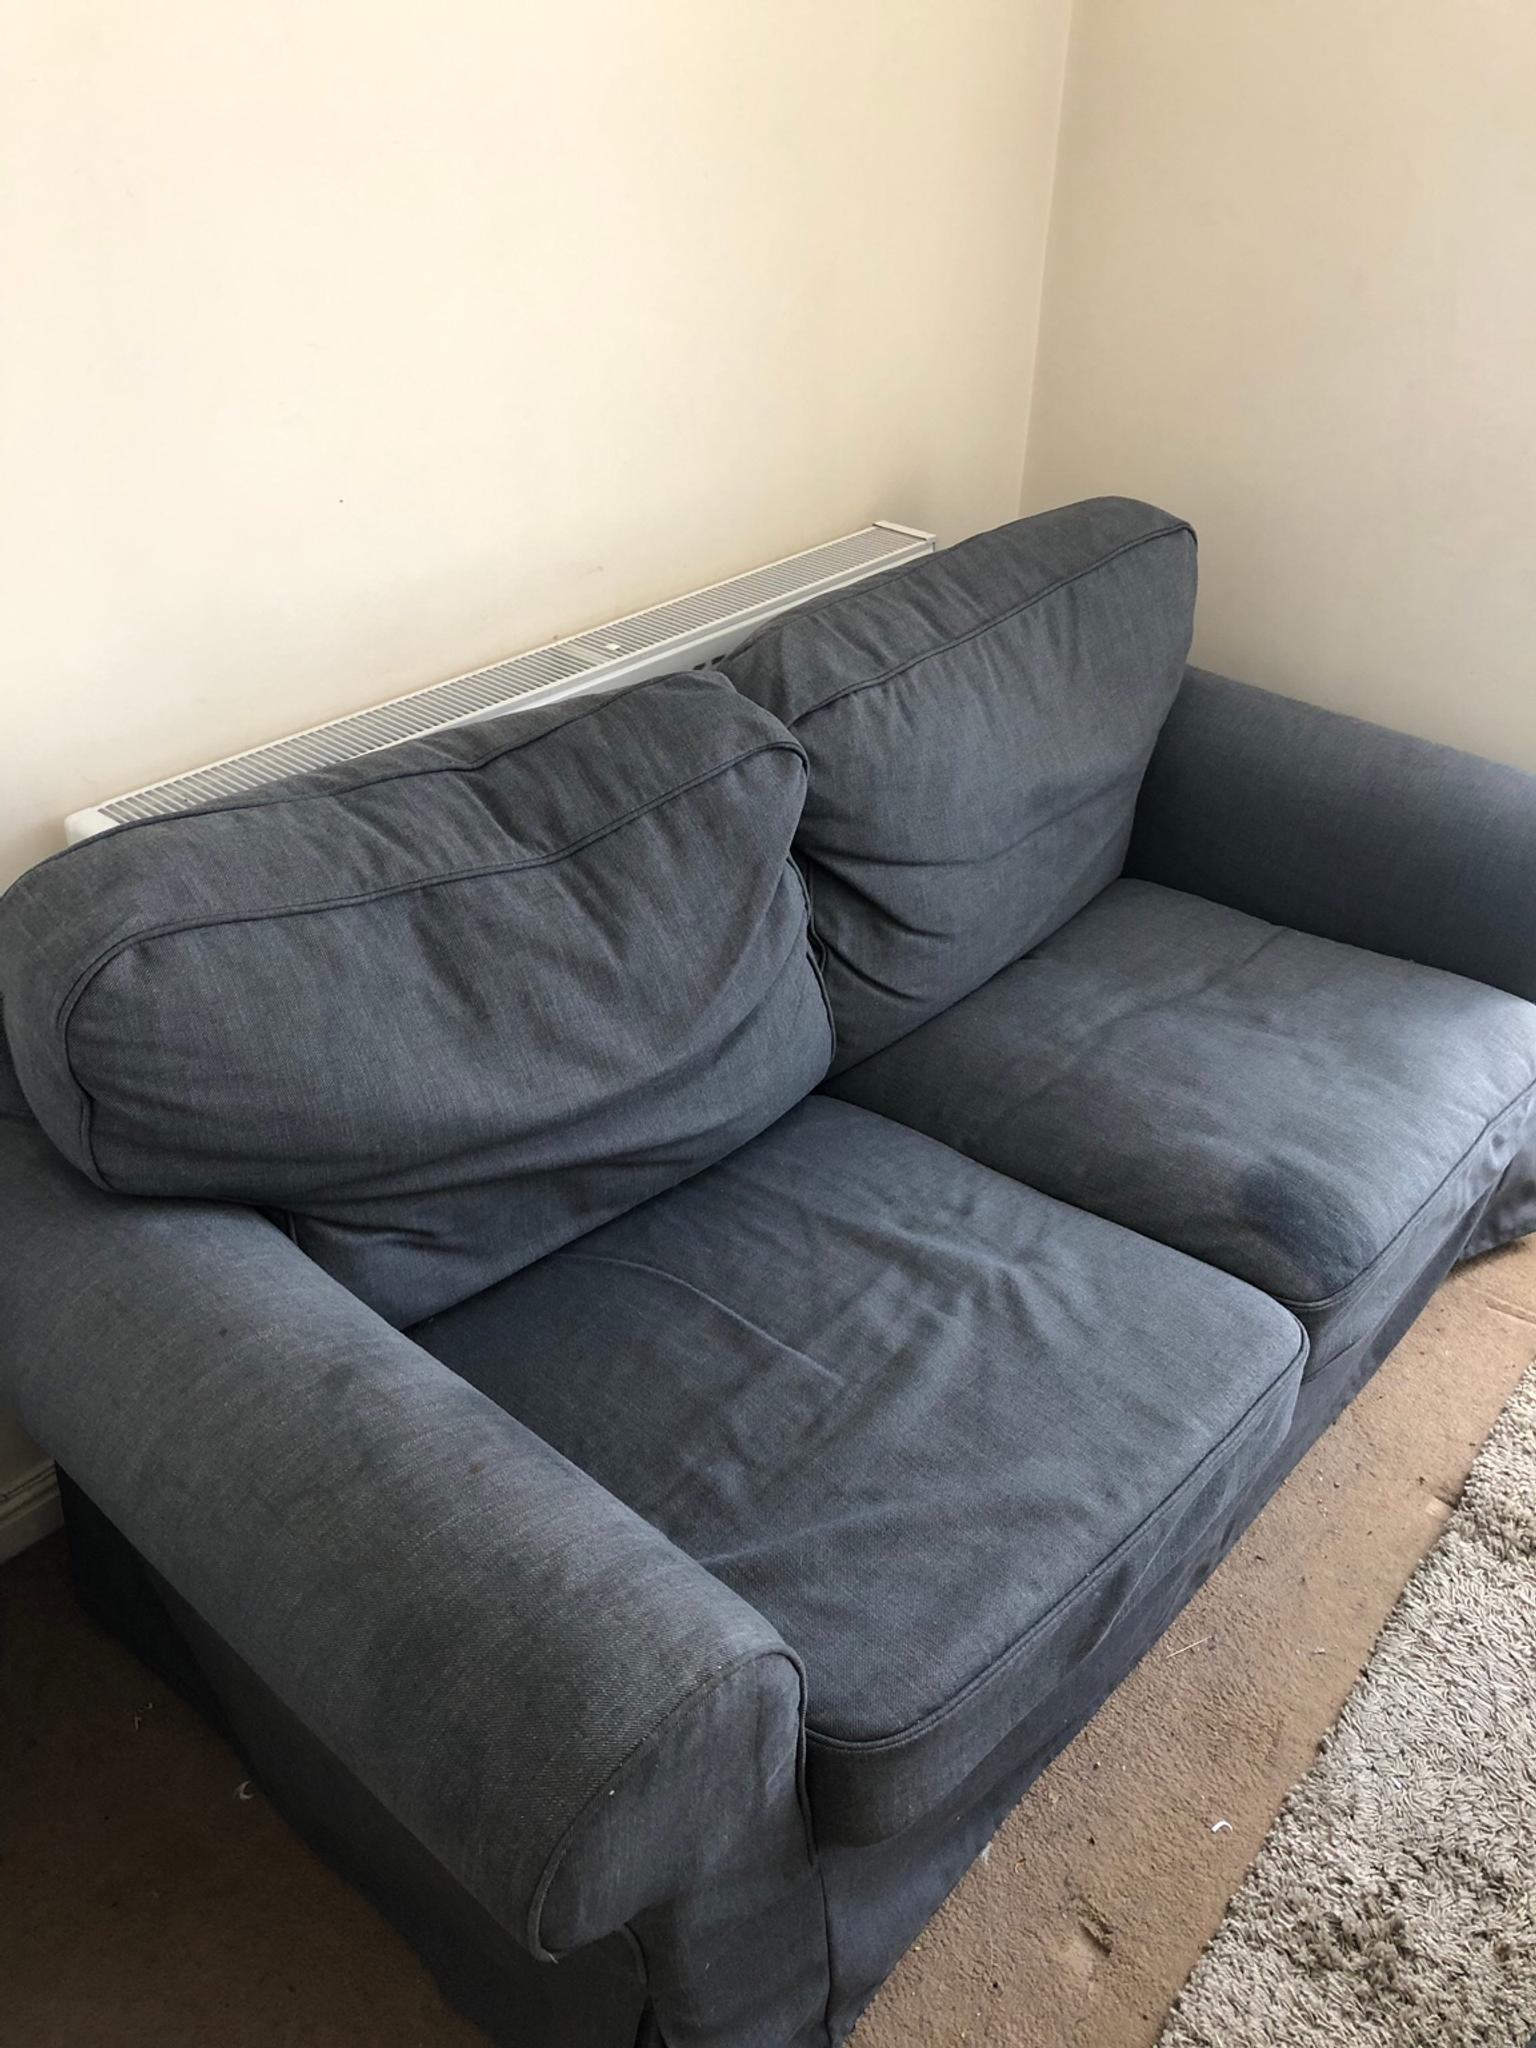 Ikea Ektorp Sofa In Sw19 London Borough Of Merton For 50 00 For